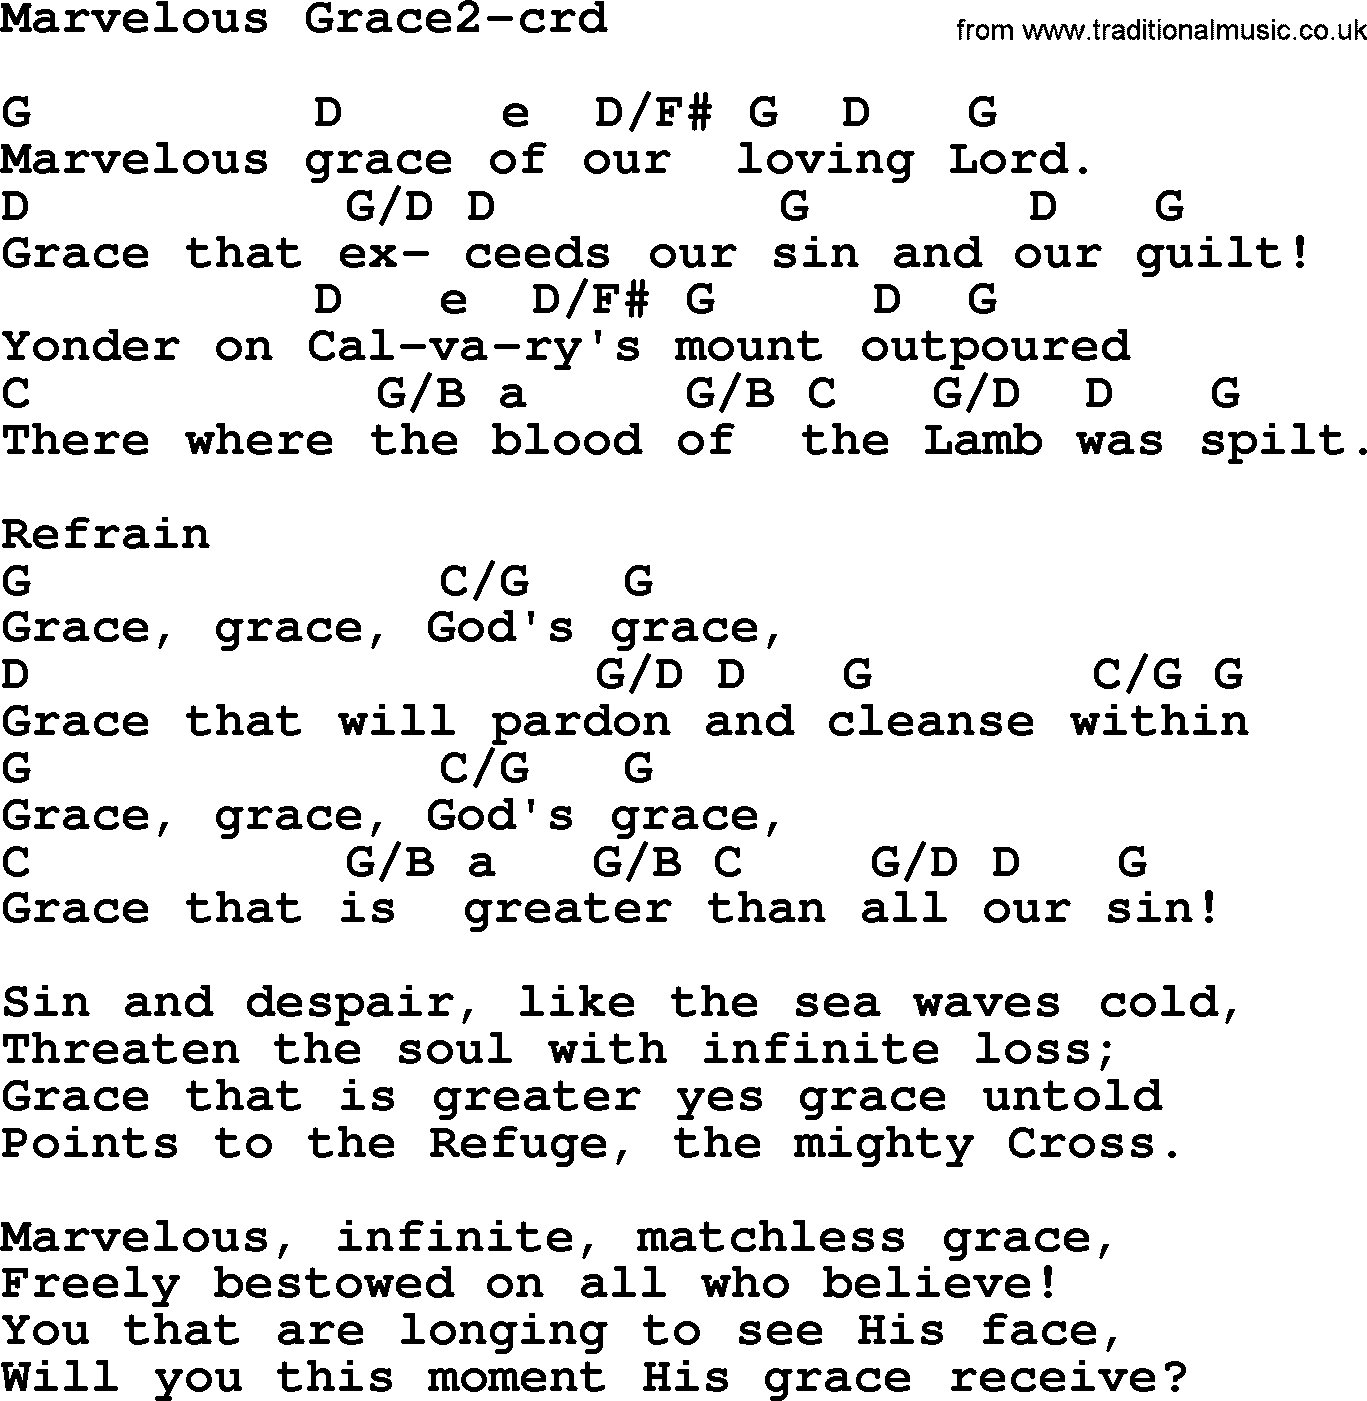 Top 500 Hymn: Marvelous Grace2, lyrics and chords